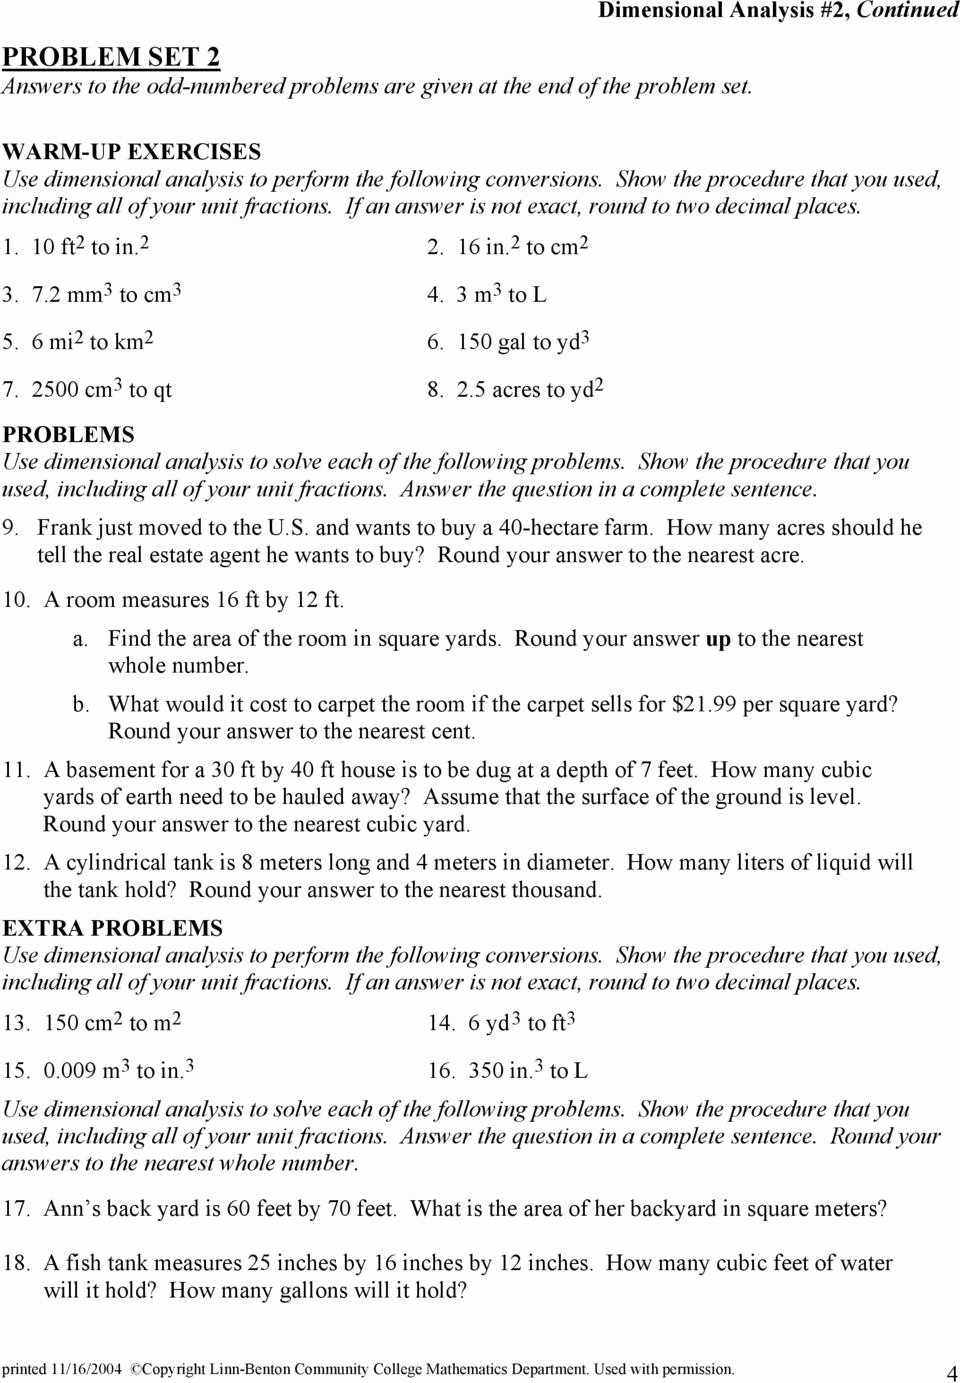 Unit Conversion Worksheet Pdf Inspirational Algebra 1 Unit Conversion Worksheet Answers